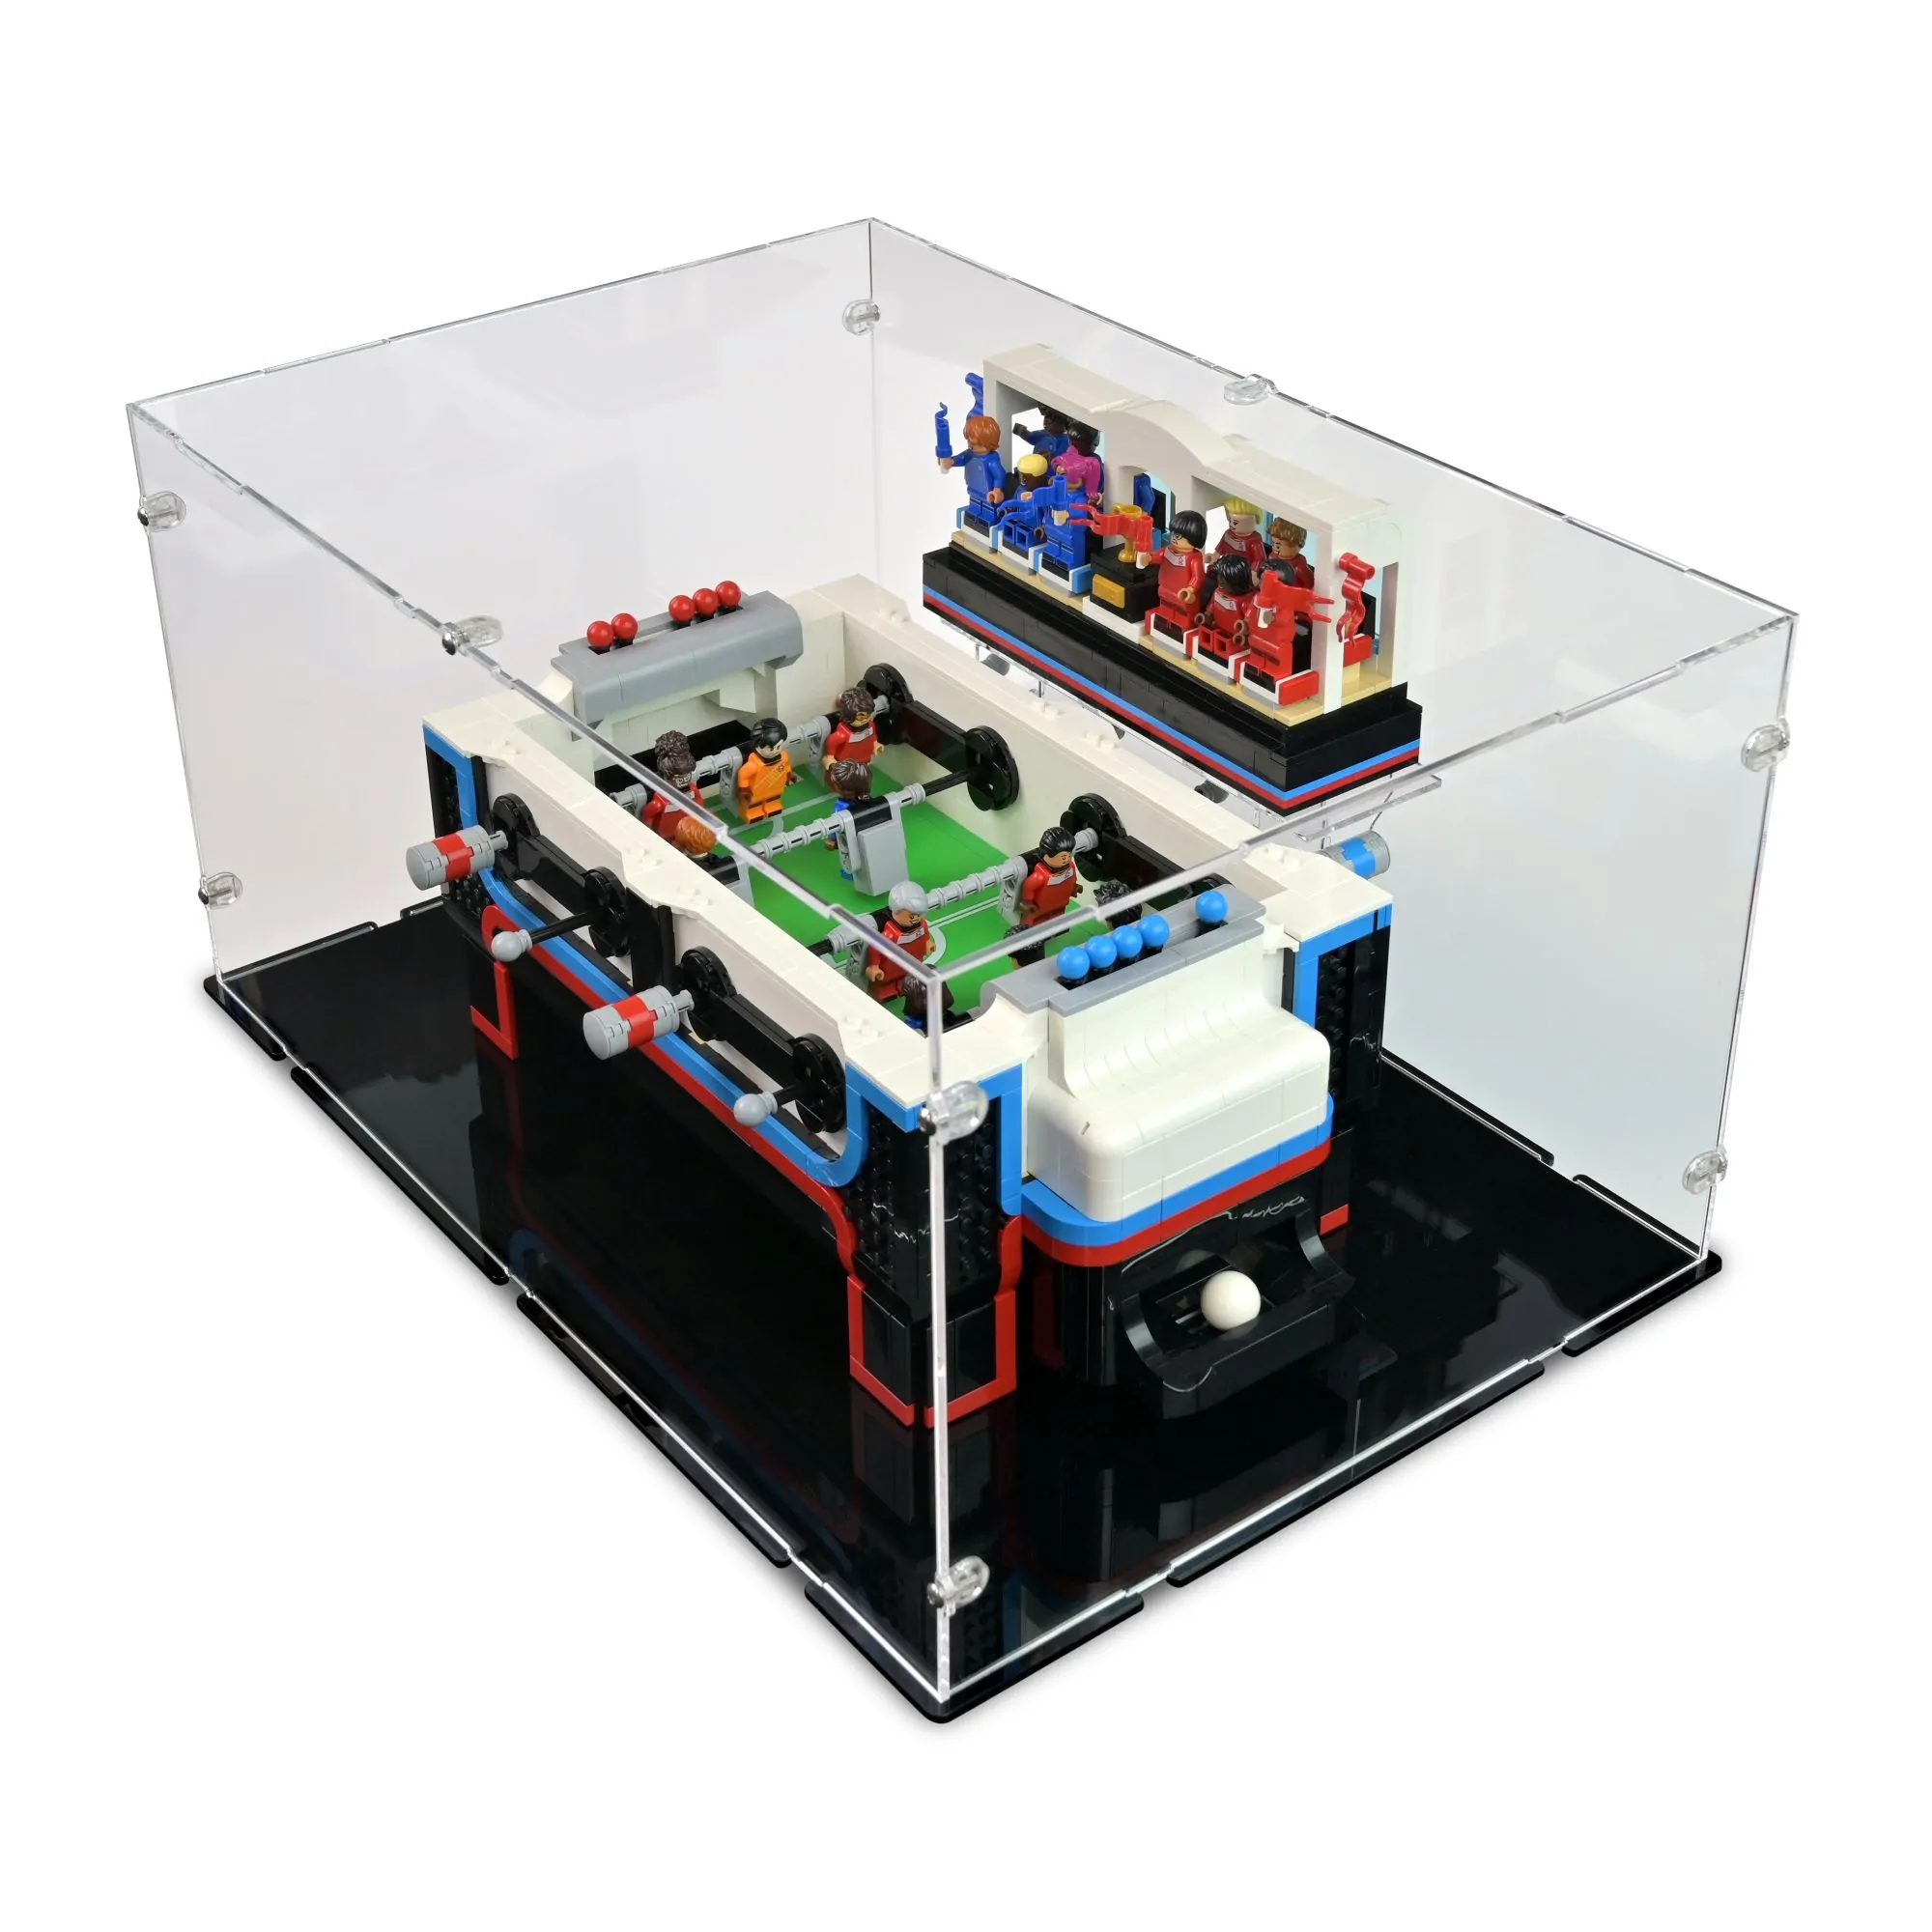 LEGO Table Football Set 21337